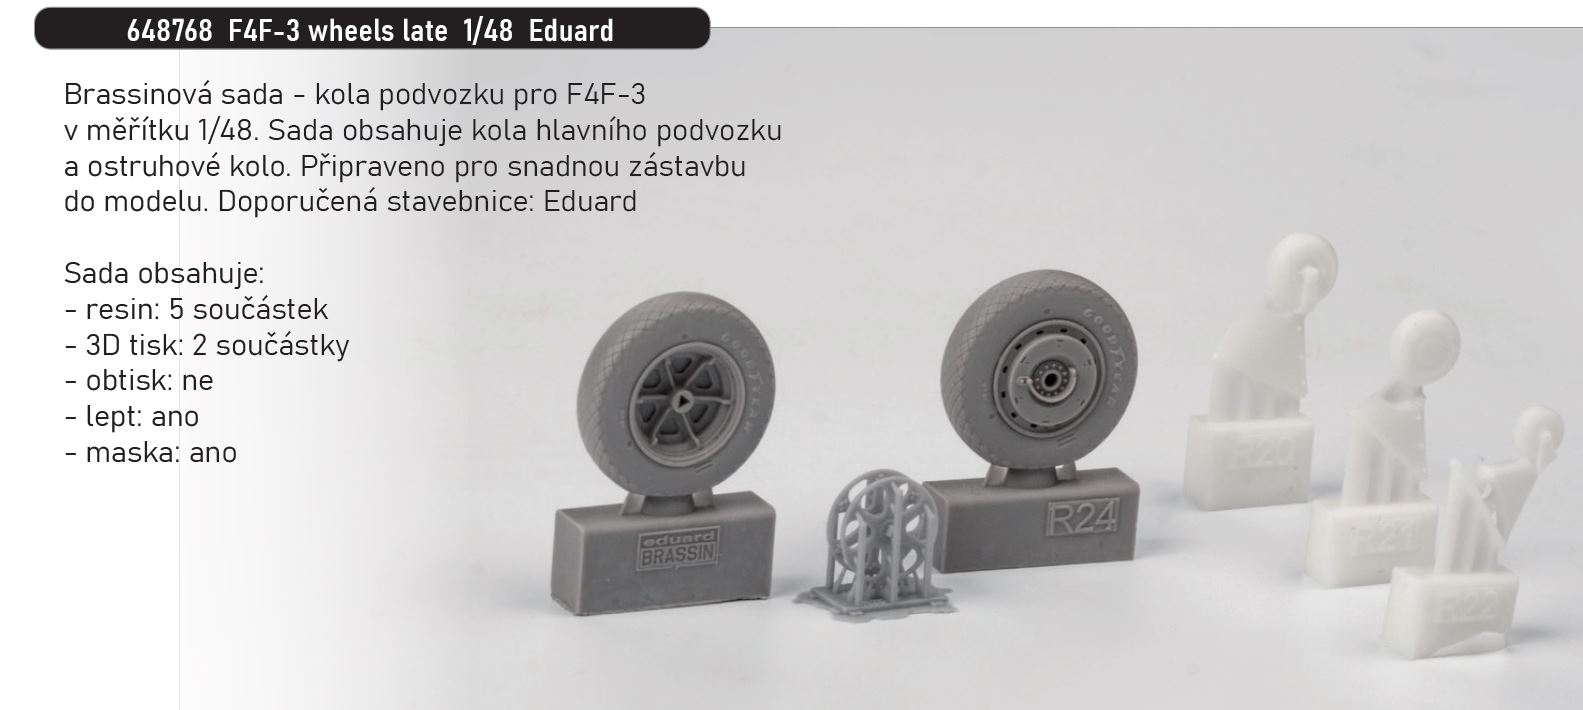 1/48 F4F-3 wheels late (EDUARD)